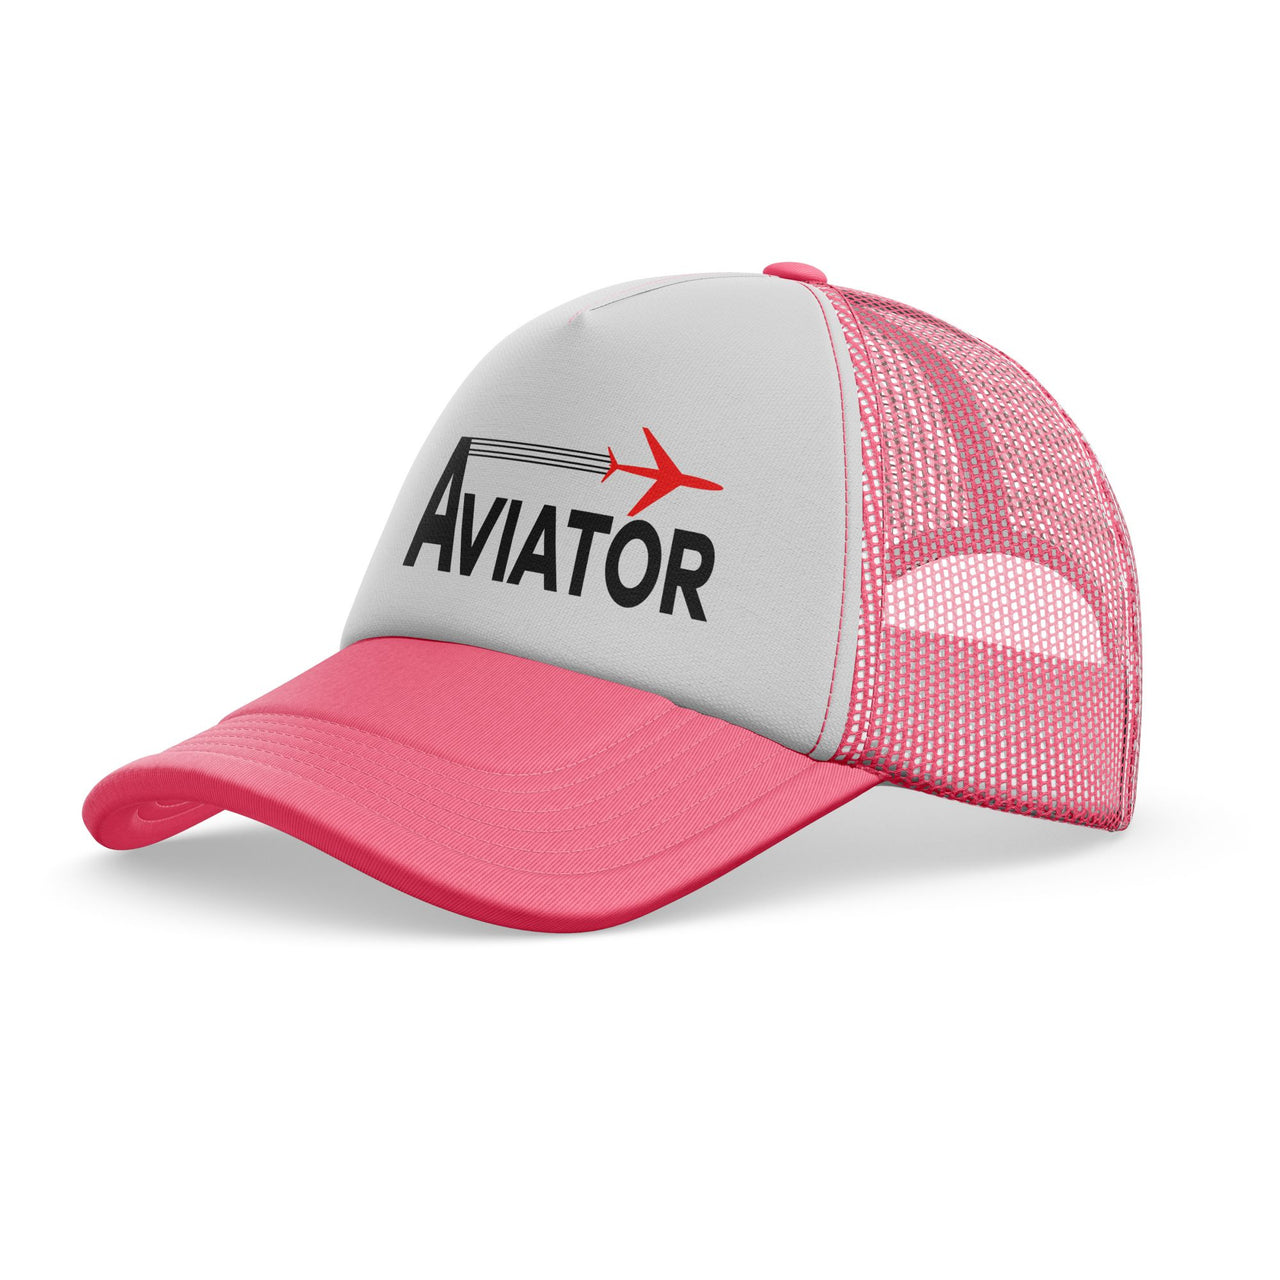 Aviator Designed Trucker Caps & Hats